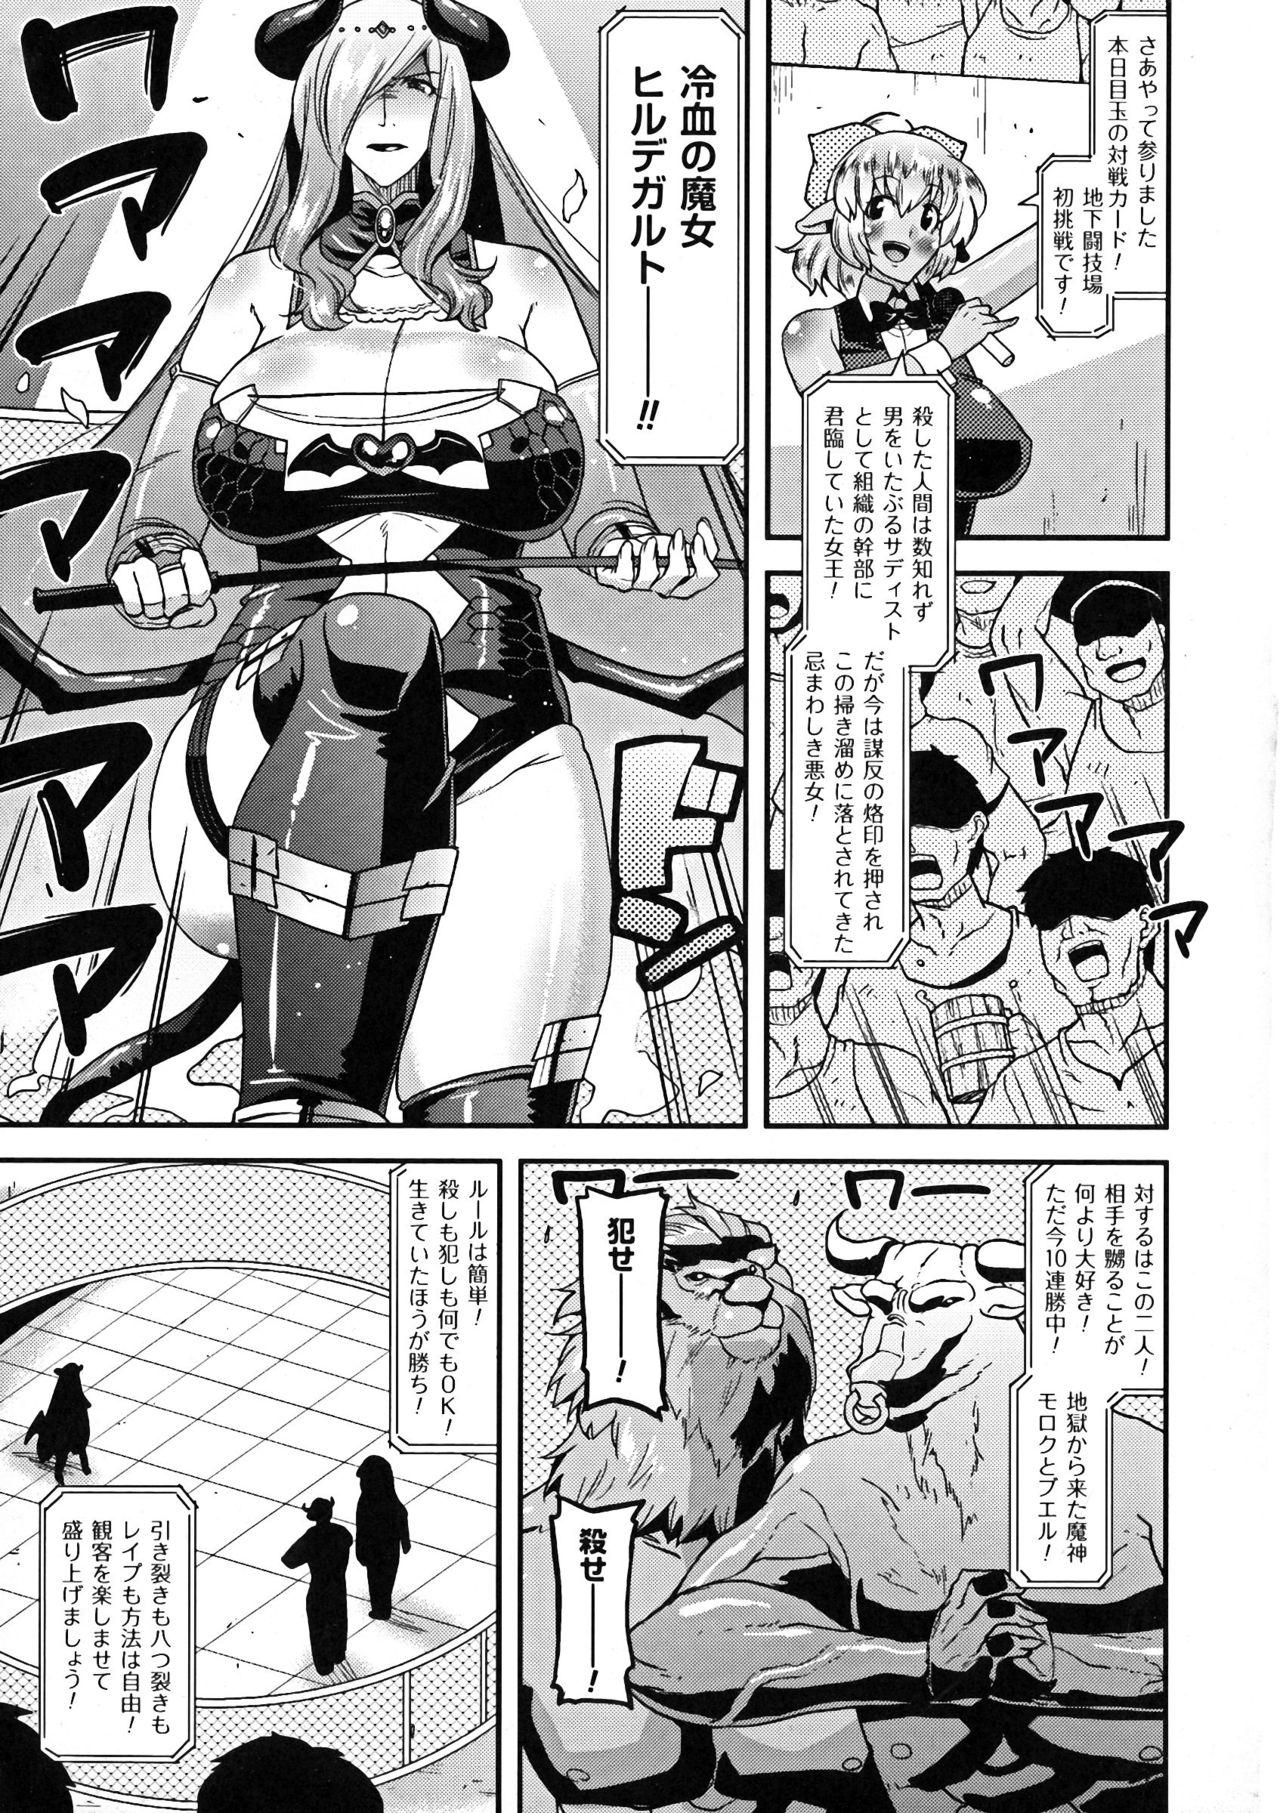 Seigi no Heroine Kangoku File DX vol. 5 182